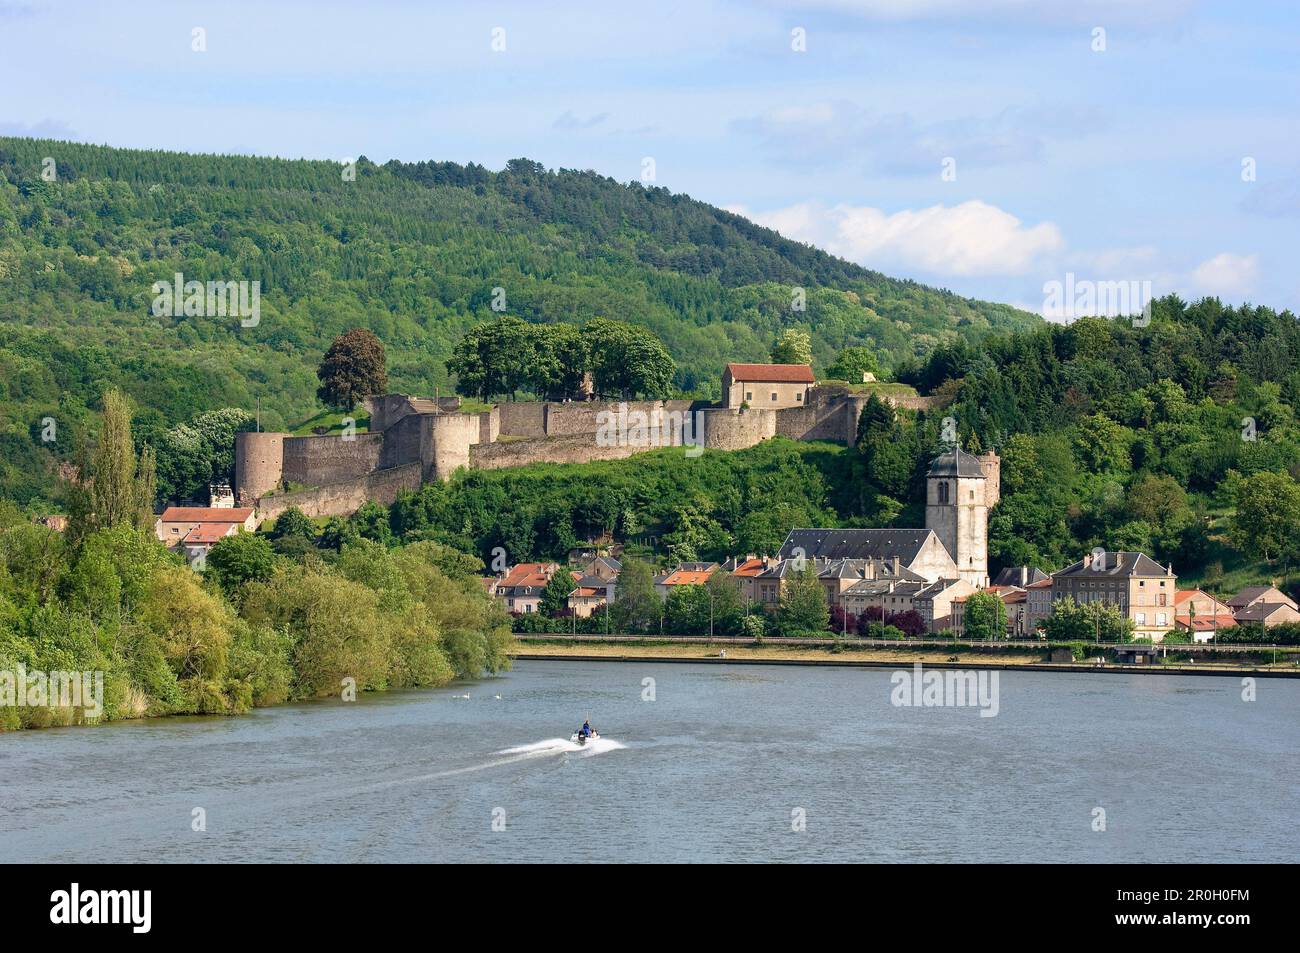 View of Sierck-les-Bains with Moselle river and castle, Sierck-les-Bains, Thionville-Est, France, Europe Stock Photo